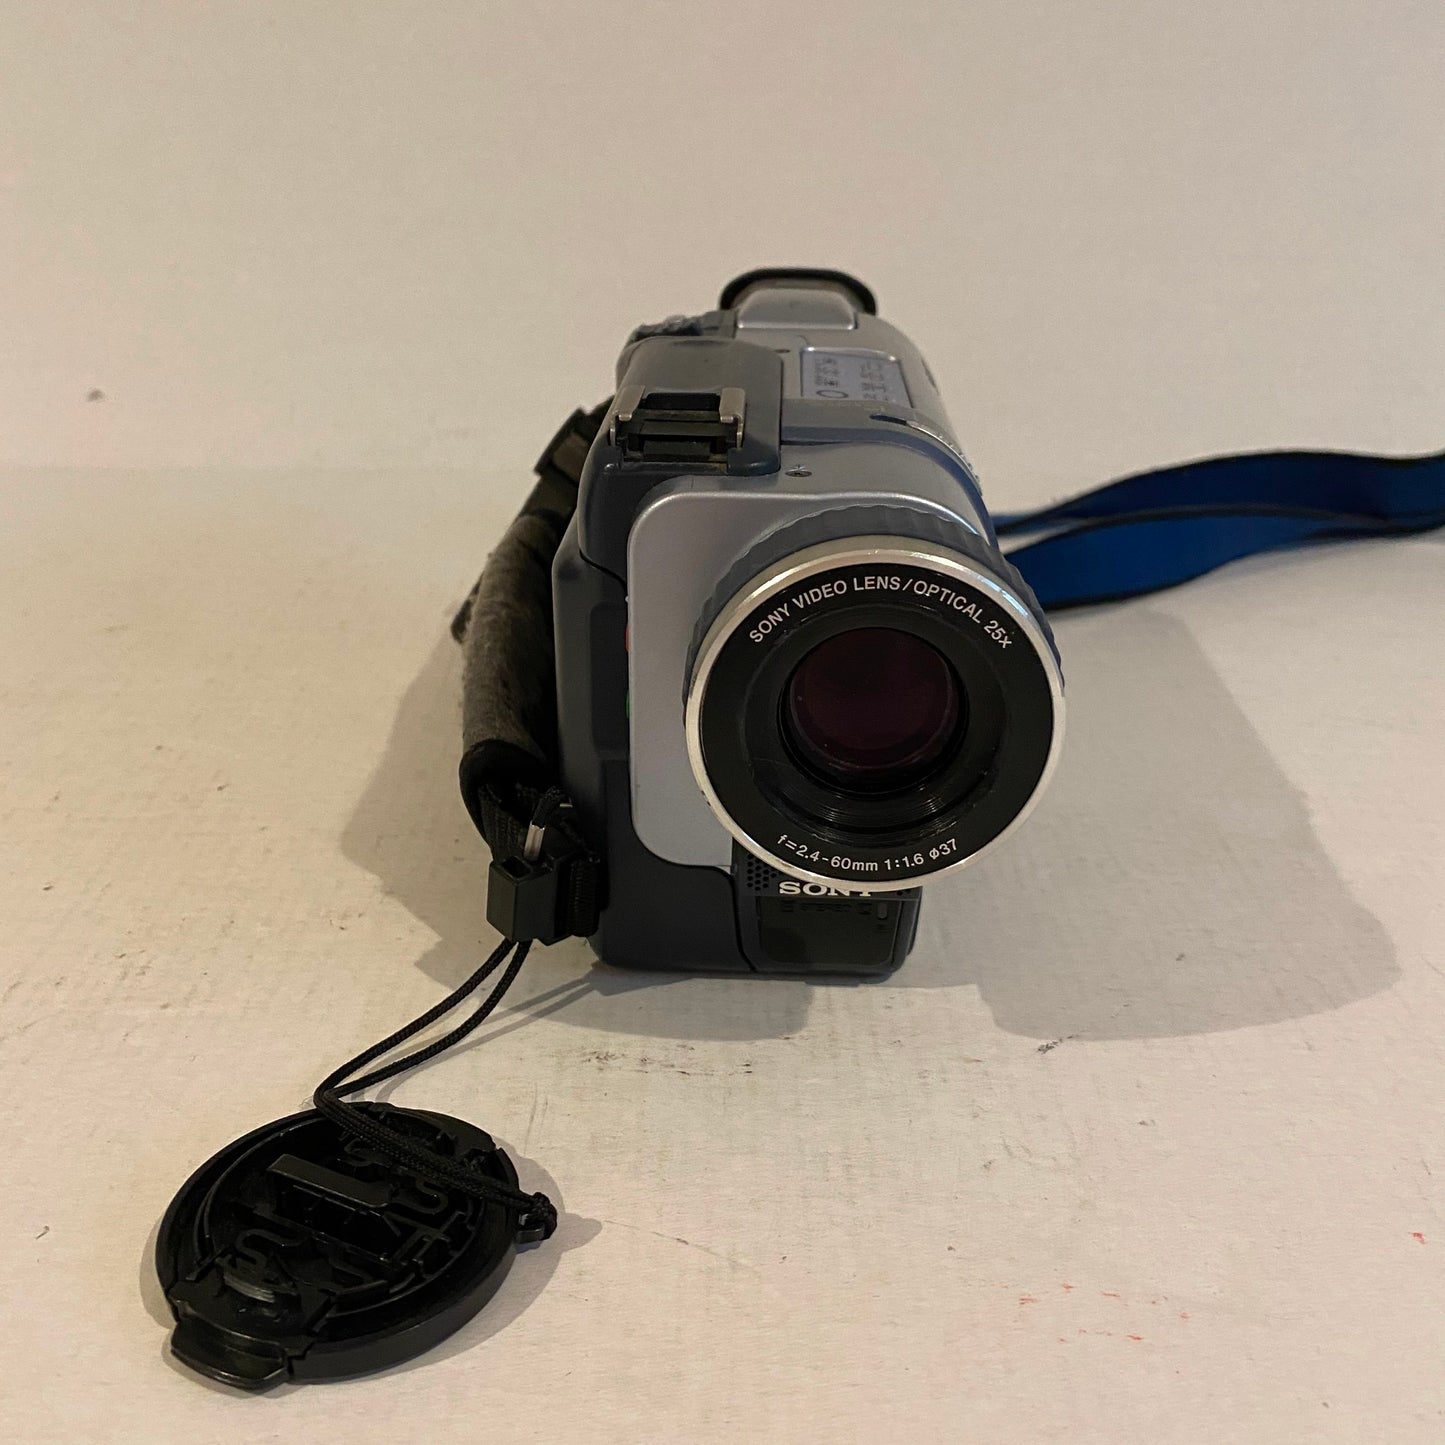 Sony NTSC Digital8 Handycam Camcorder - DCR-TRV340